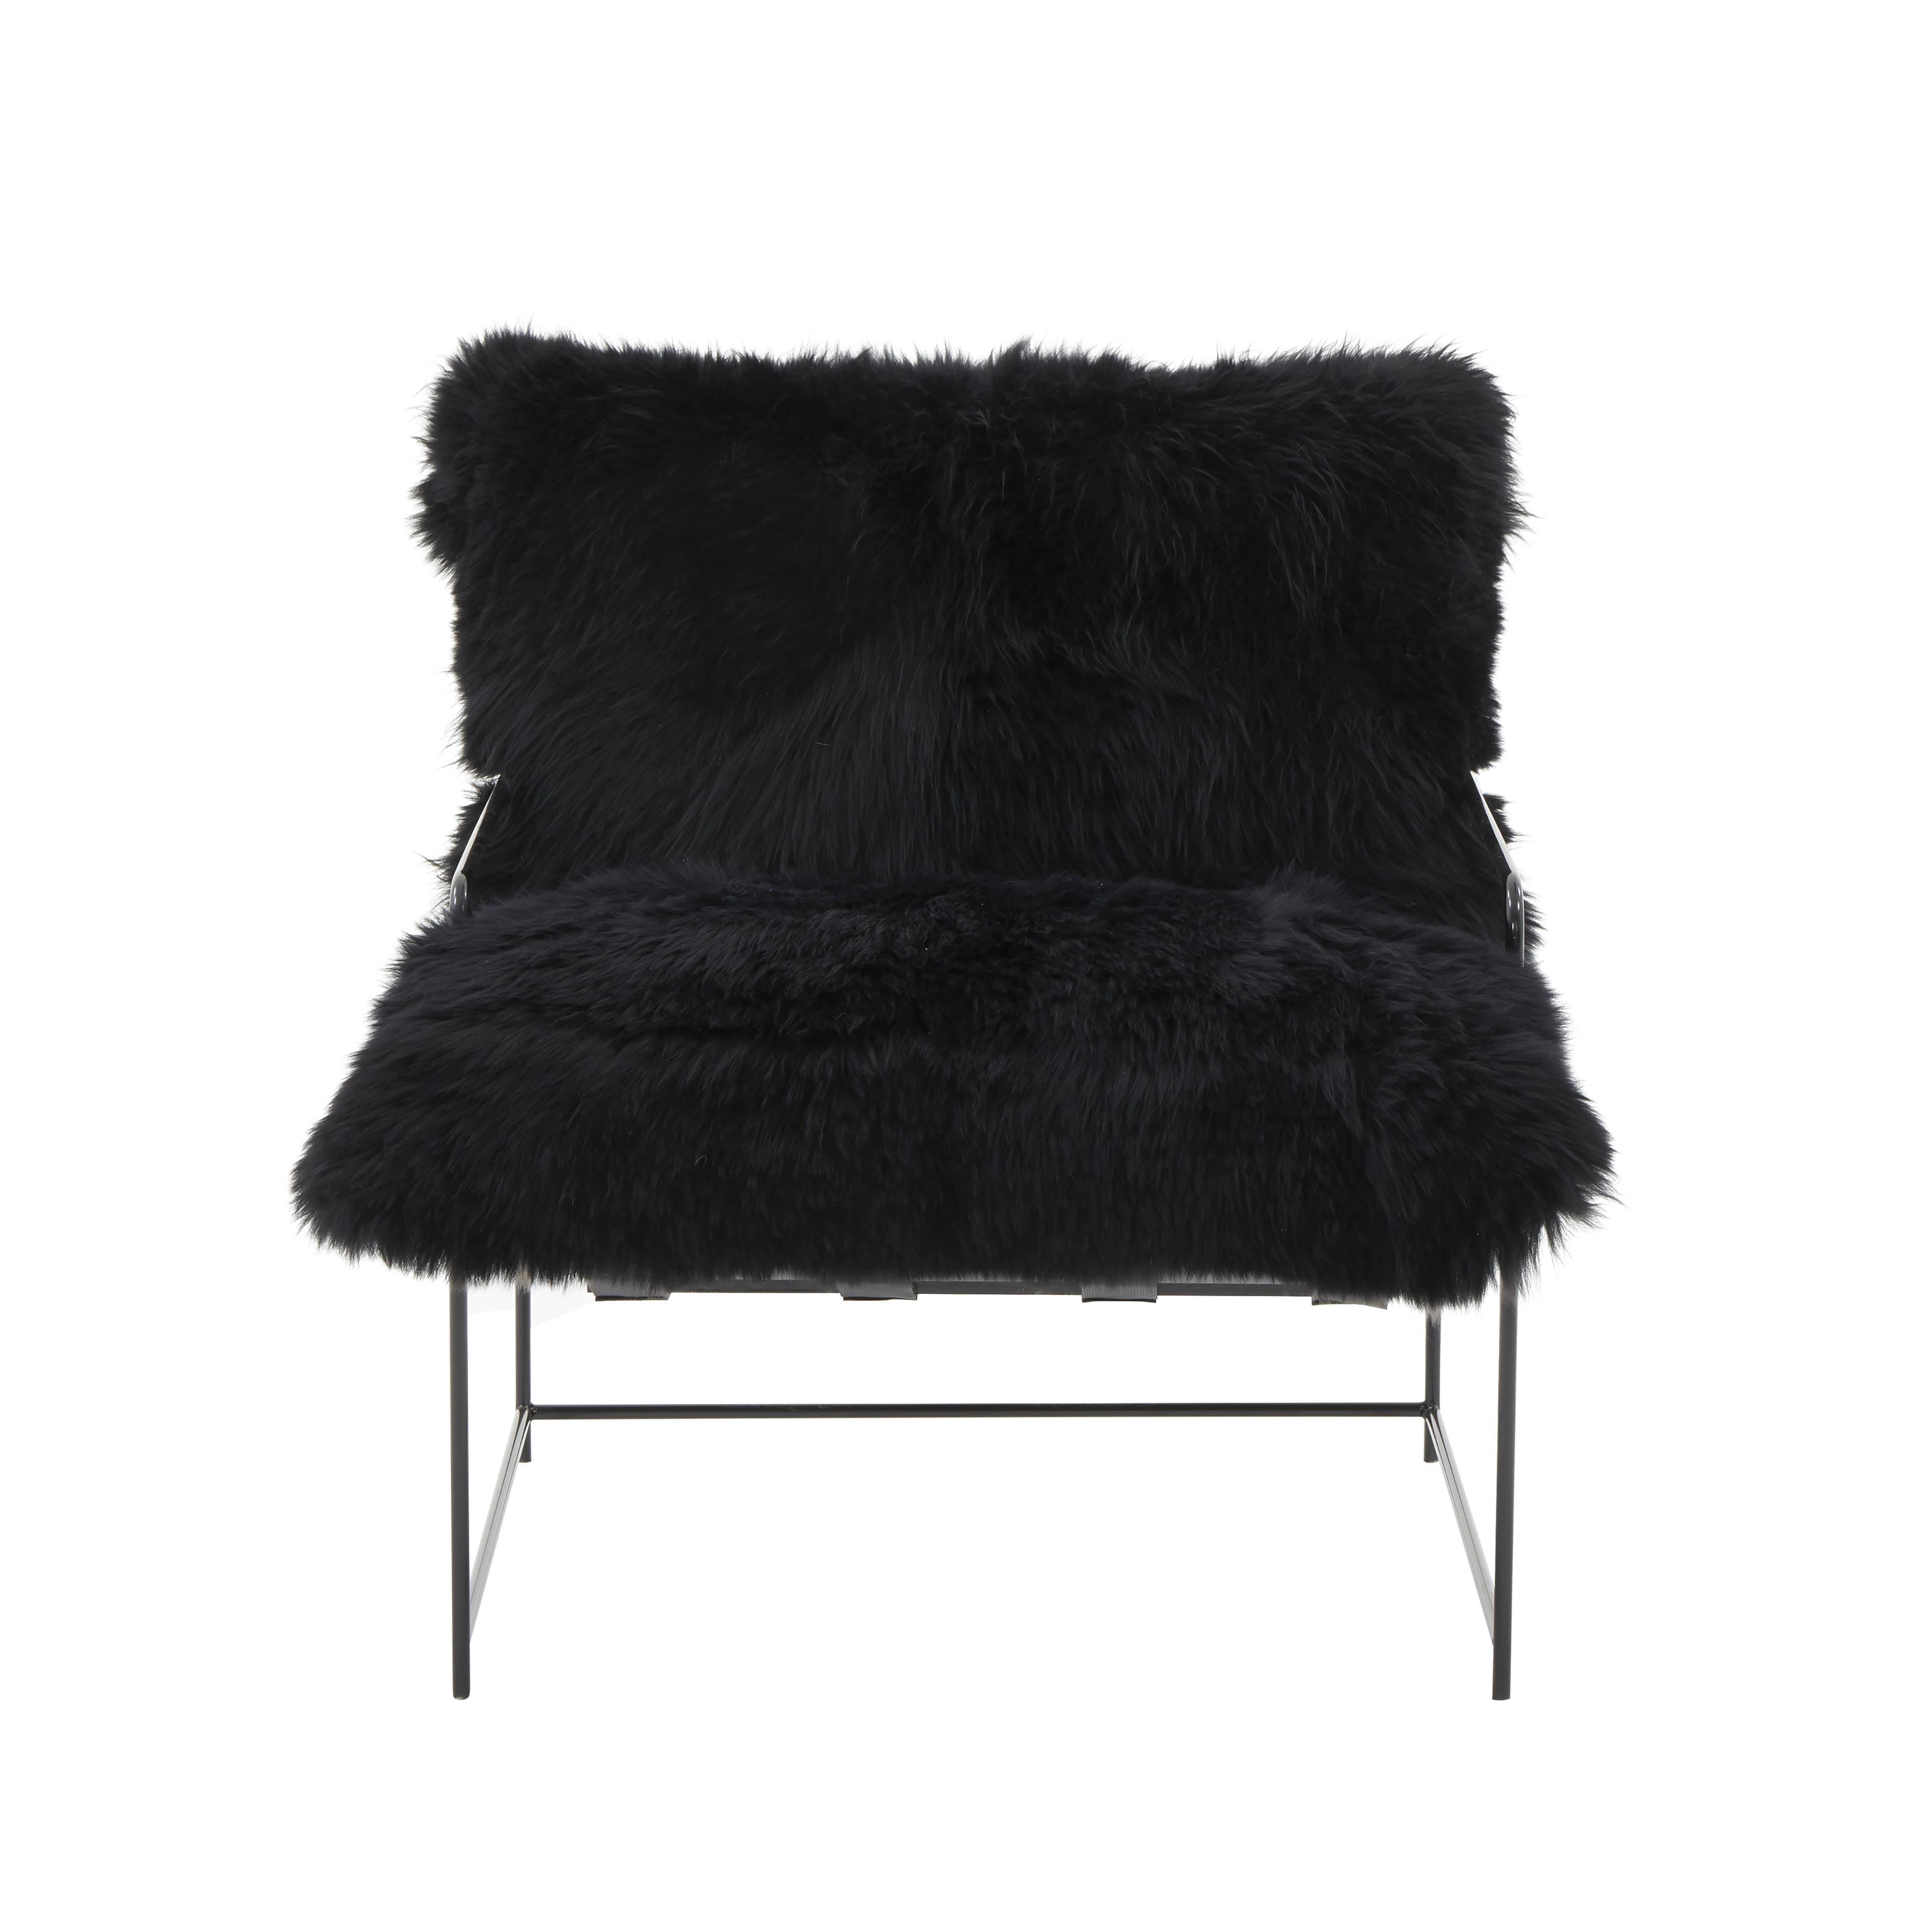 Kimi Black Genuine Sheepskin Chair - Image 1